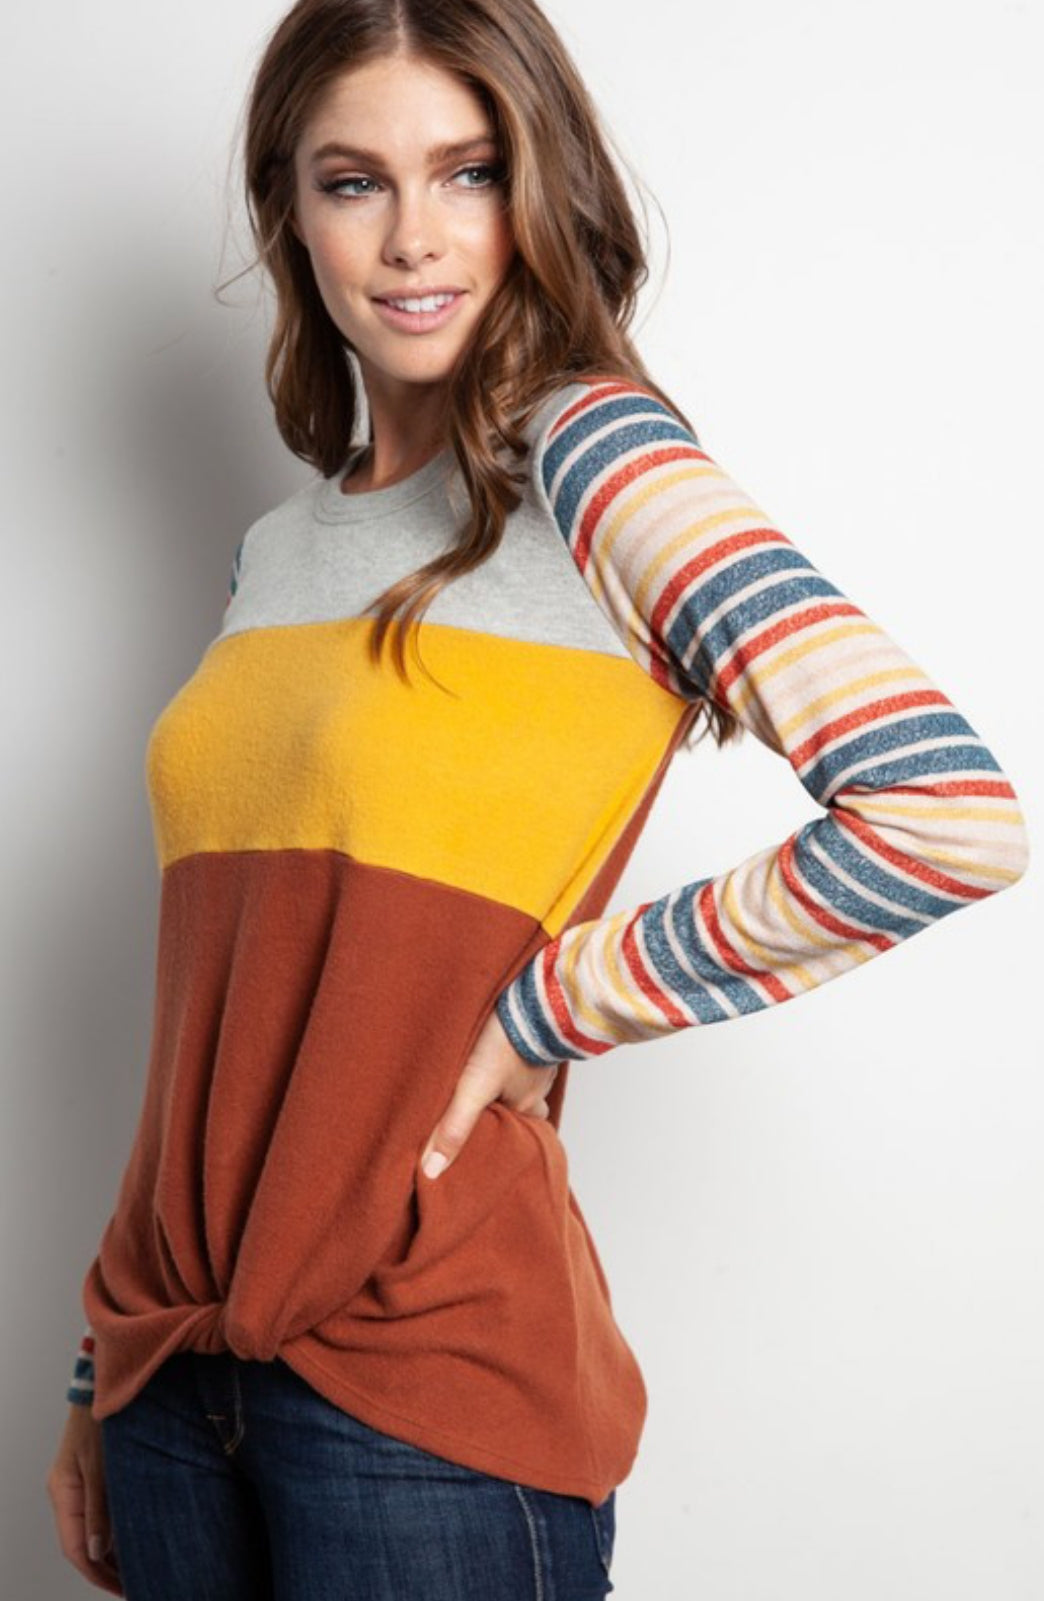 Vintage Love Sweater Top - Payton's Online Boutique